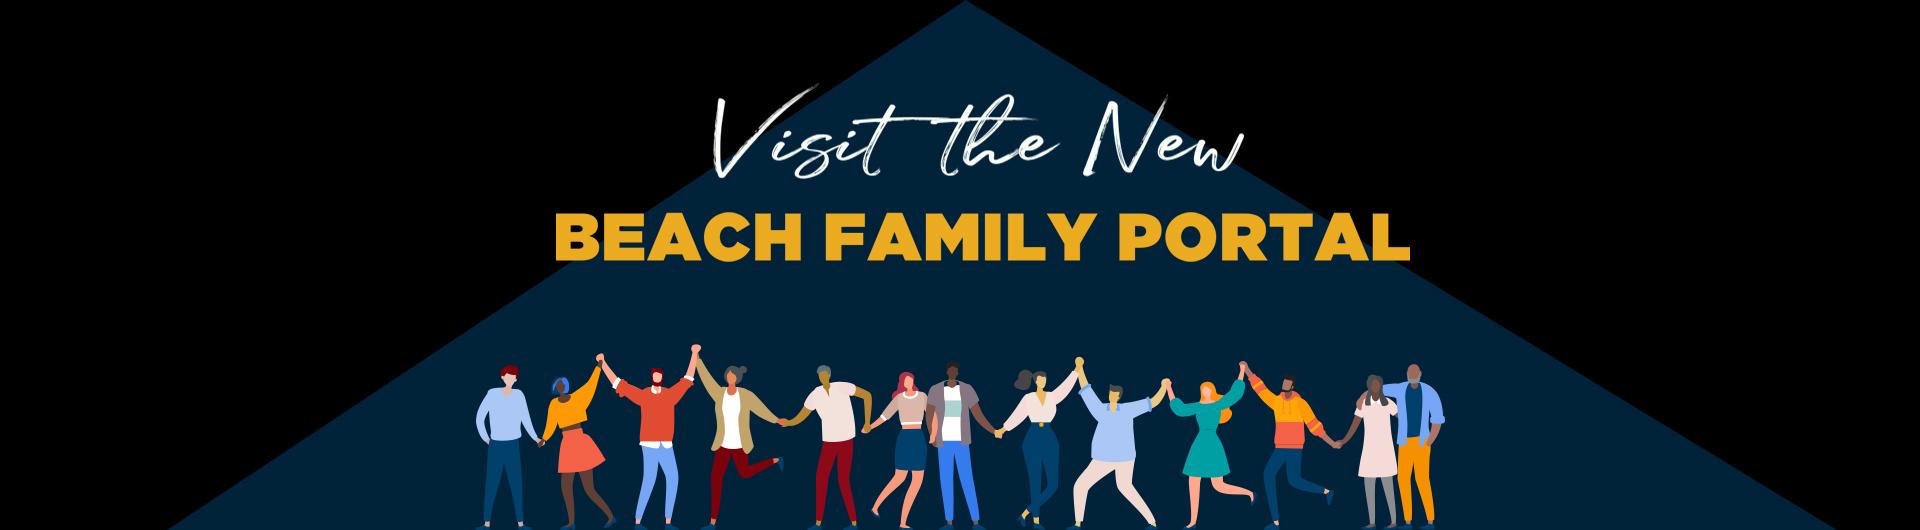 Visit the New Beach Family Portal